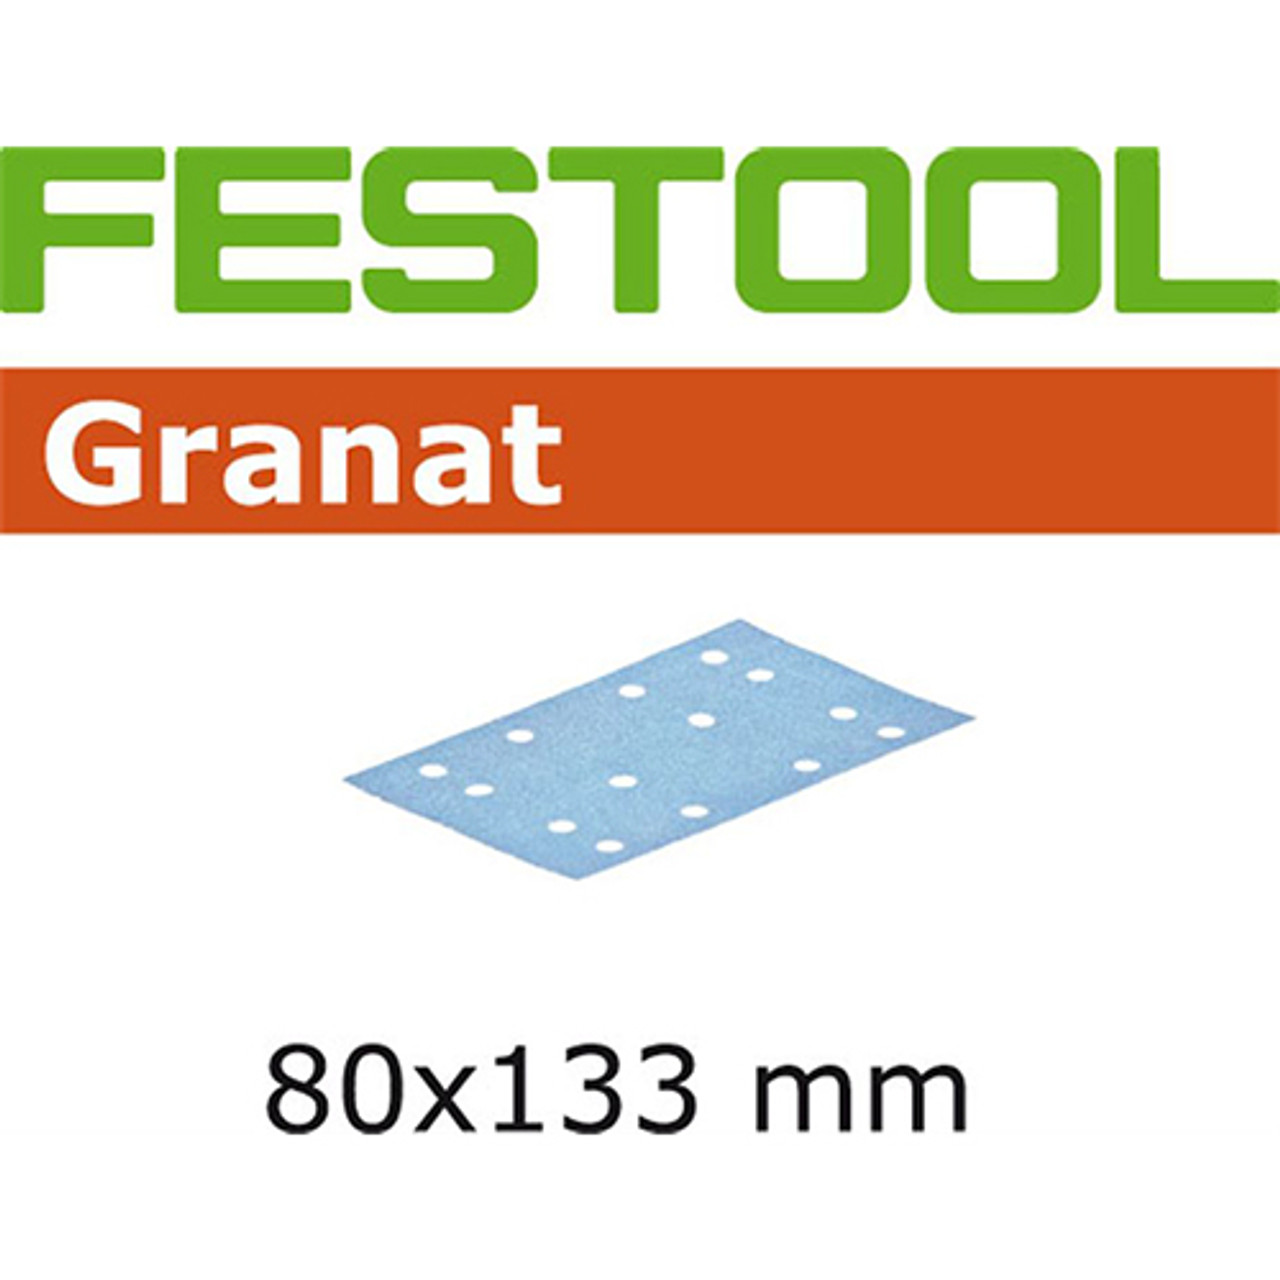 Festool LS 130, 220 Grit, Granat Sanding Sheets, 100PK